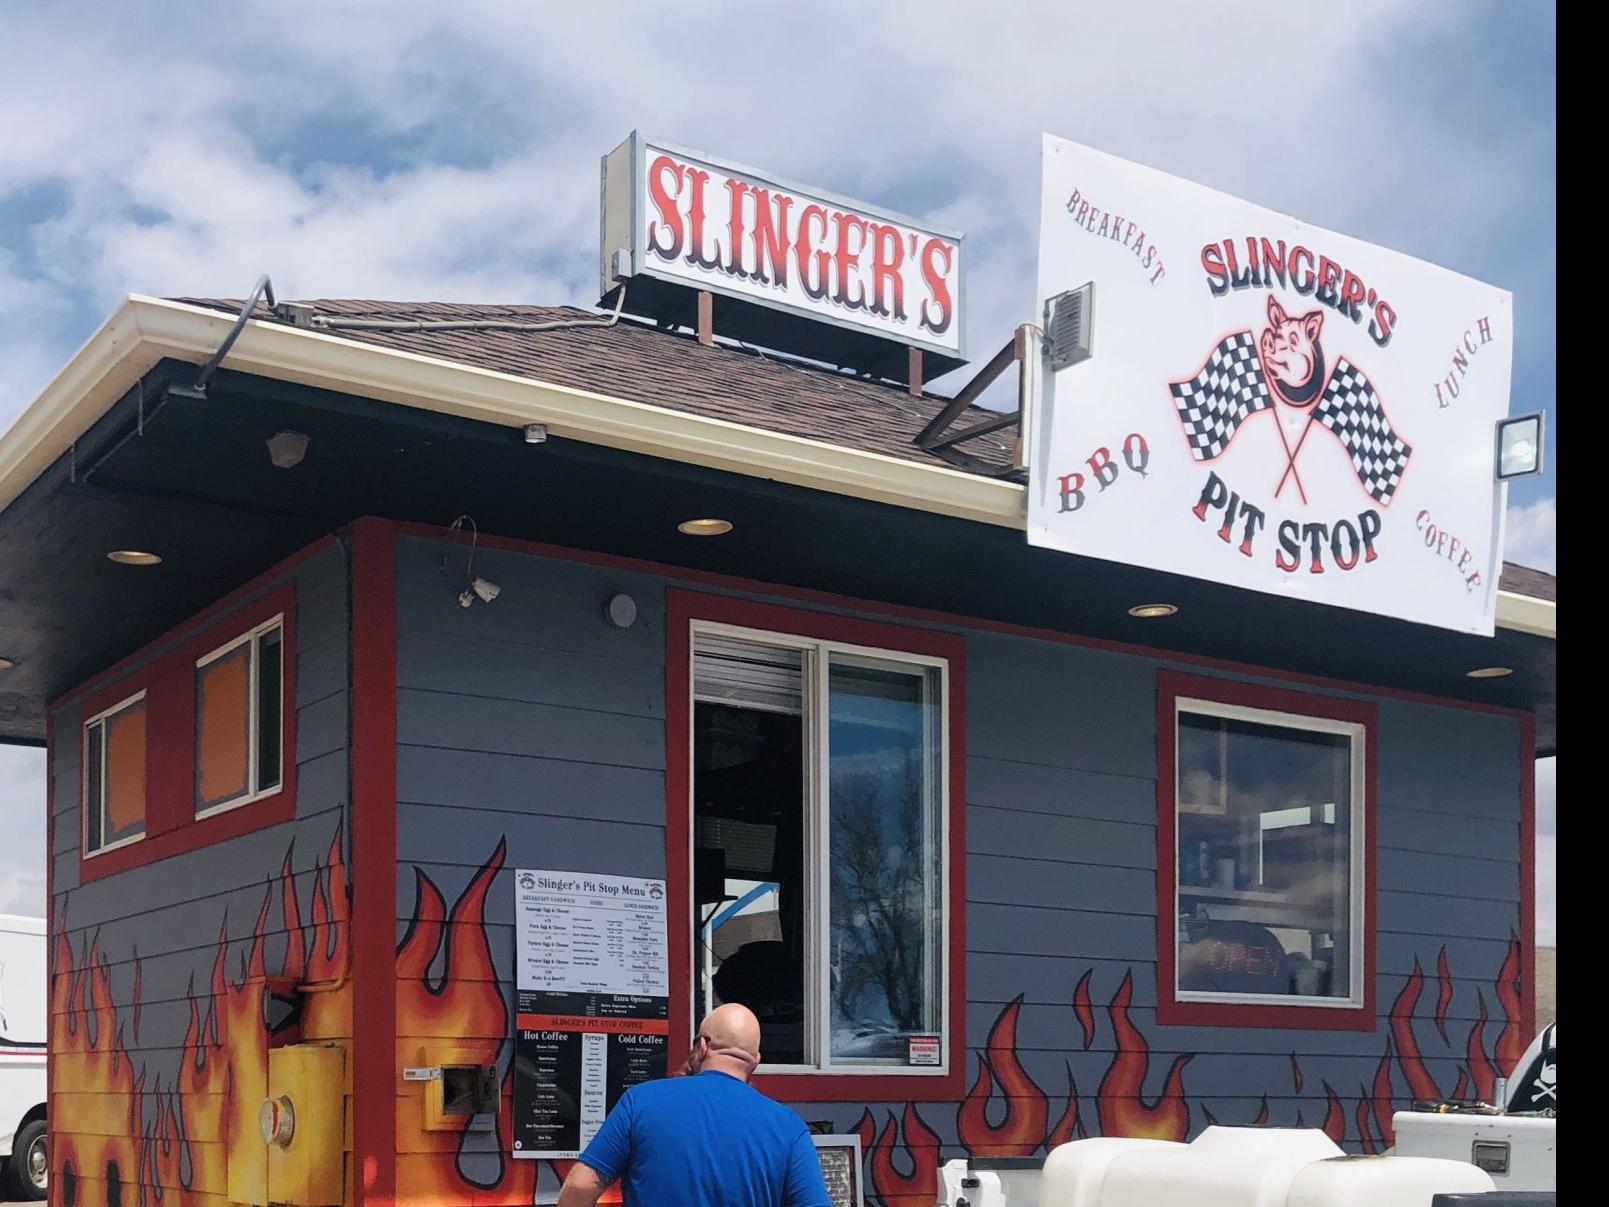 Colorado Springs has new place for grab-and-go meats | Arts & Entertainment gazette.com